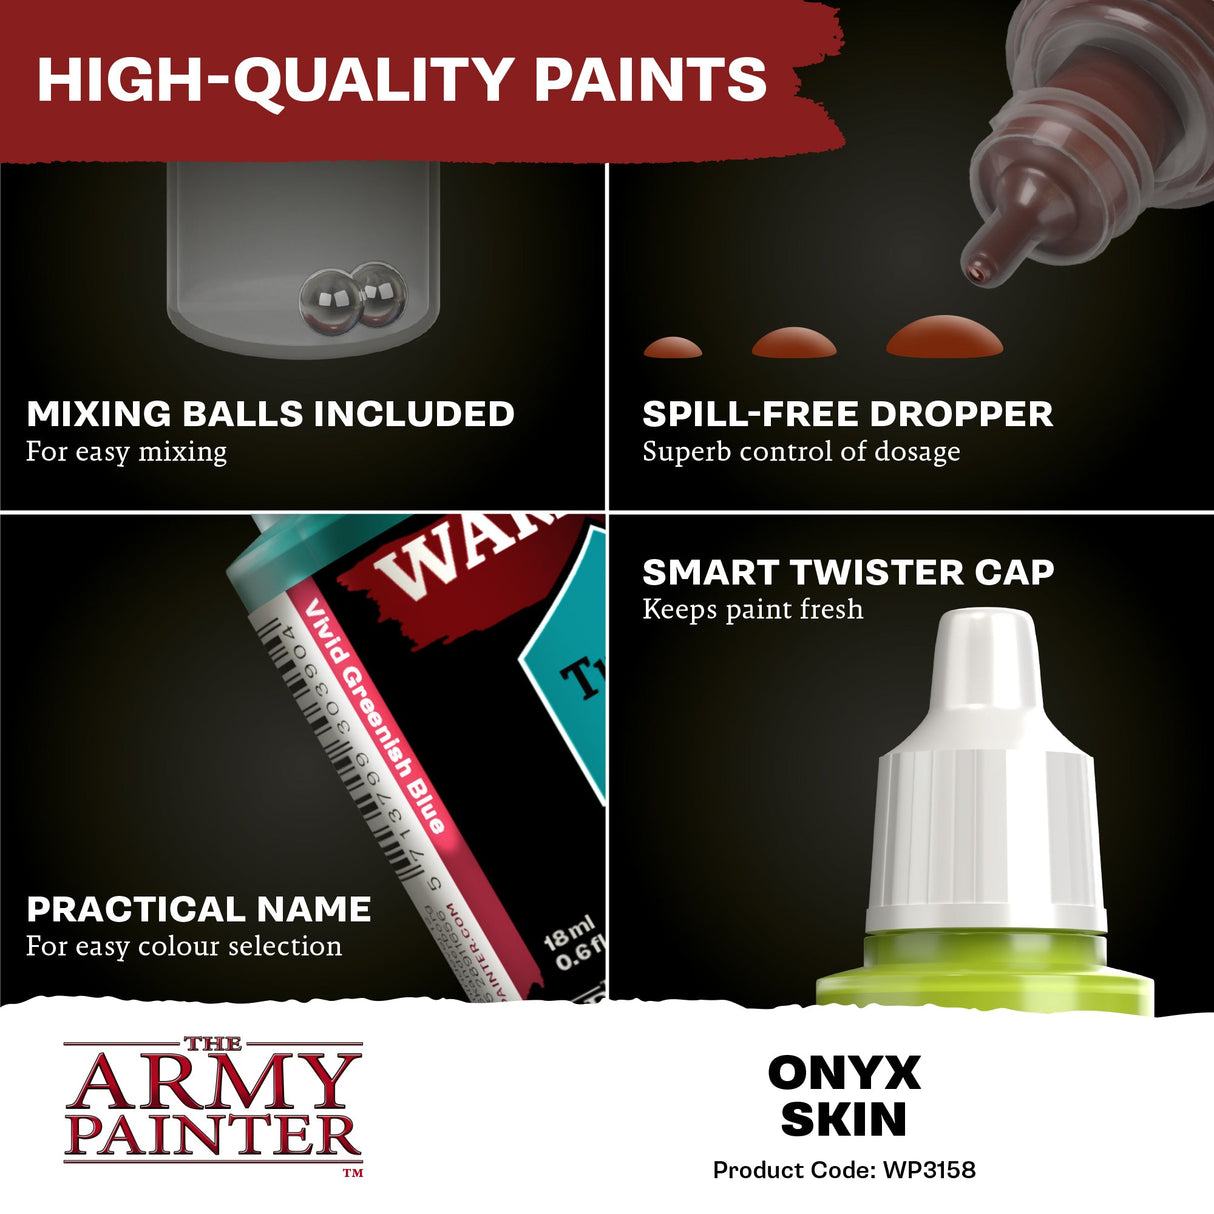 The Army Painter - Warpaints Fanatic: Onyx Skin